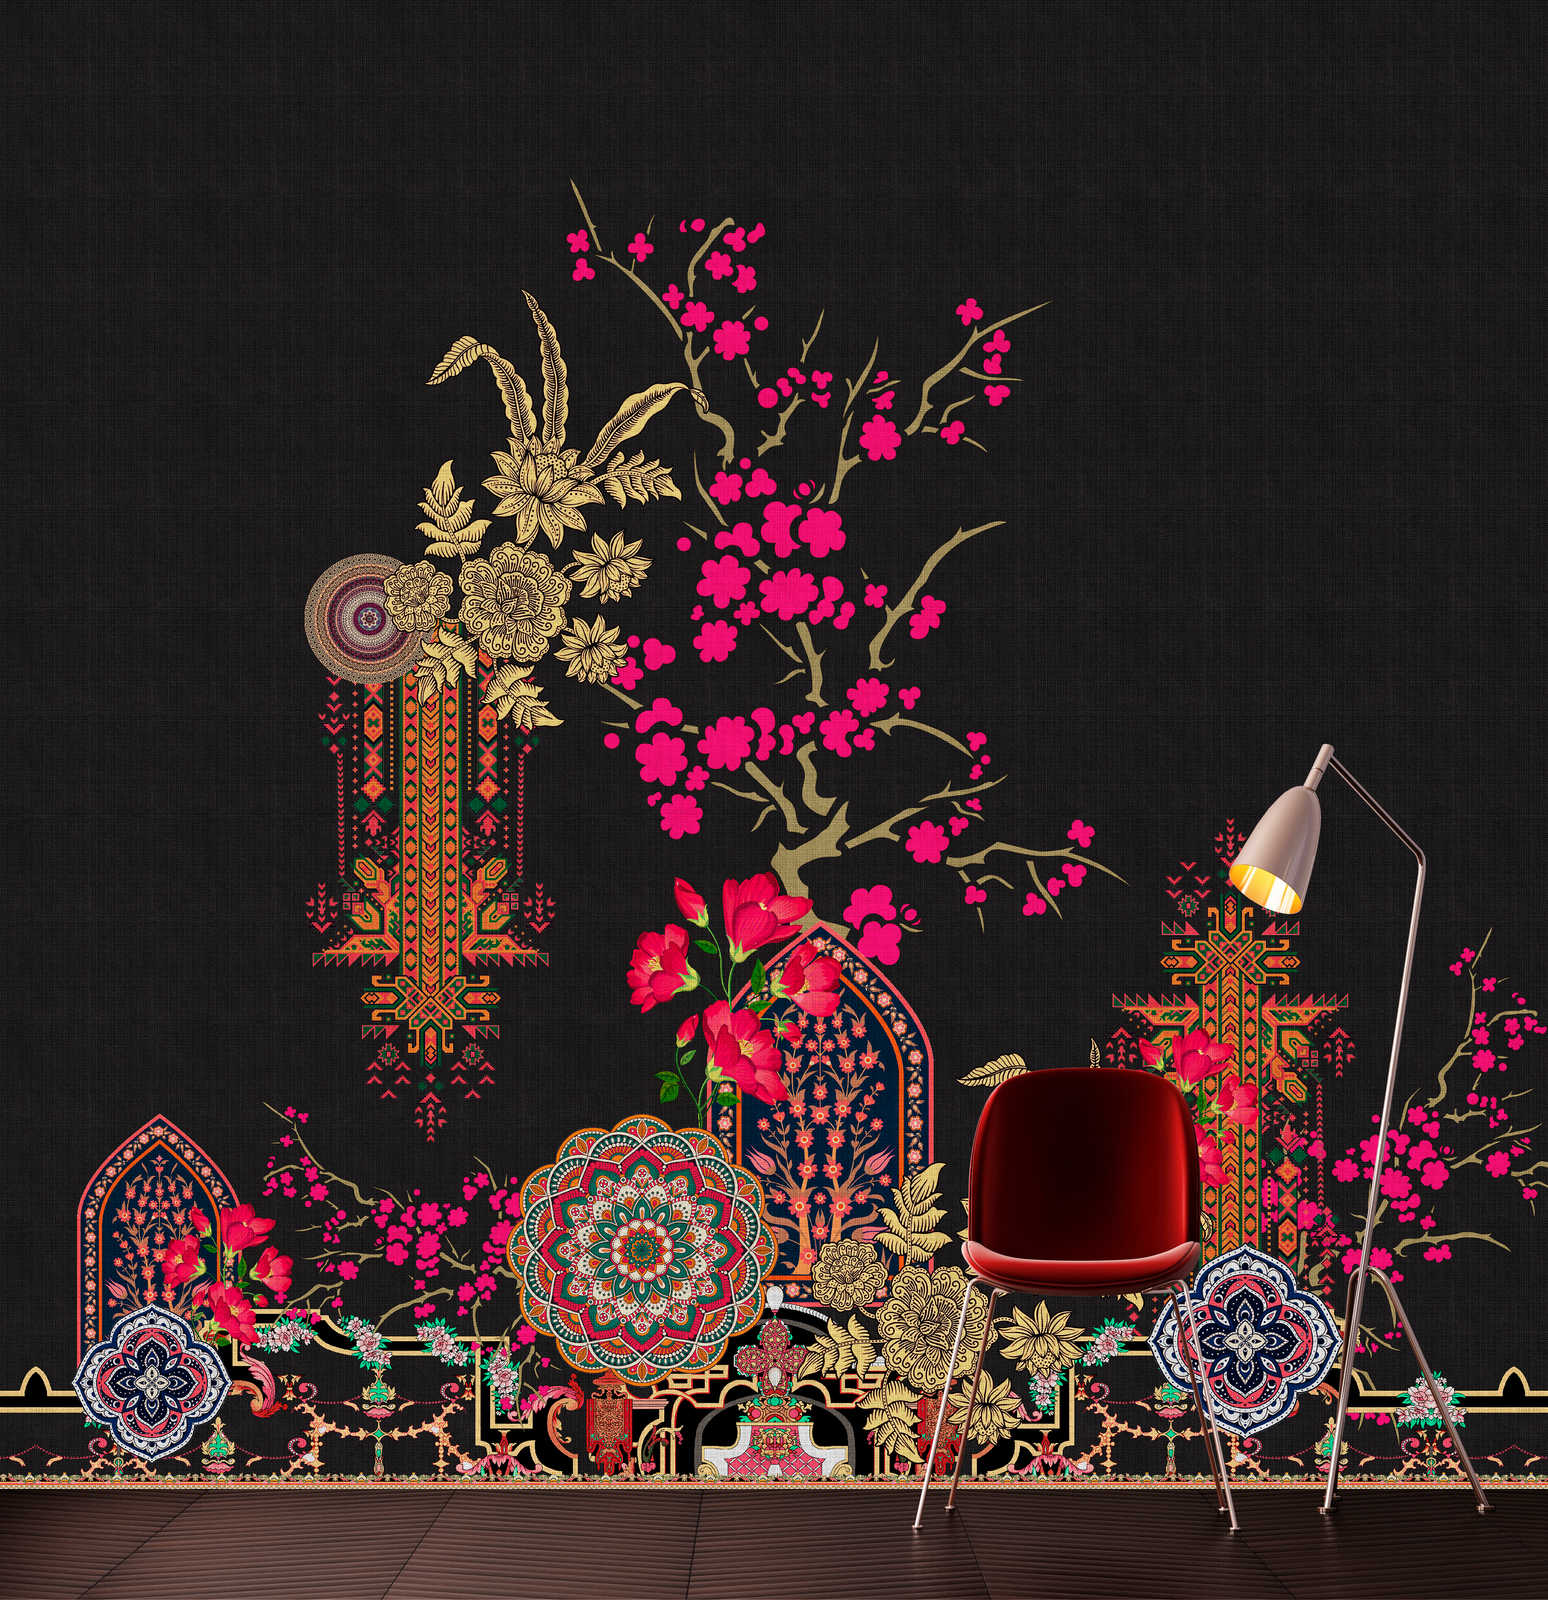             Oriental Garden 2 - Papier peint motifs tropicaux & fleurs
        